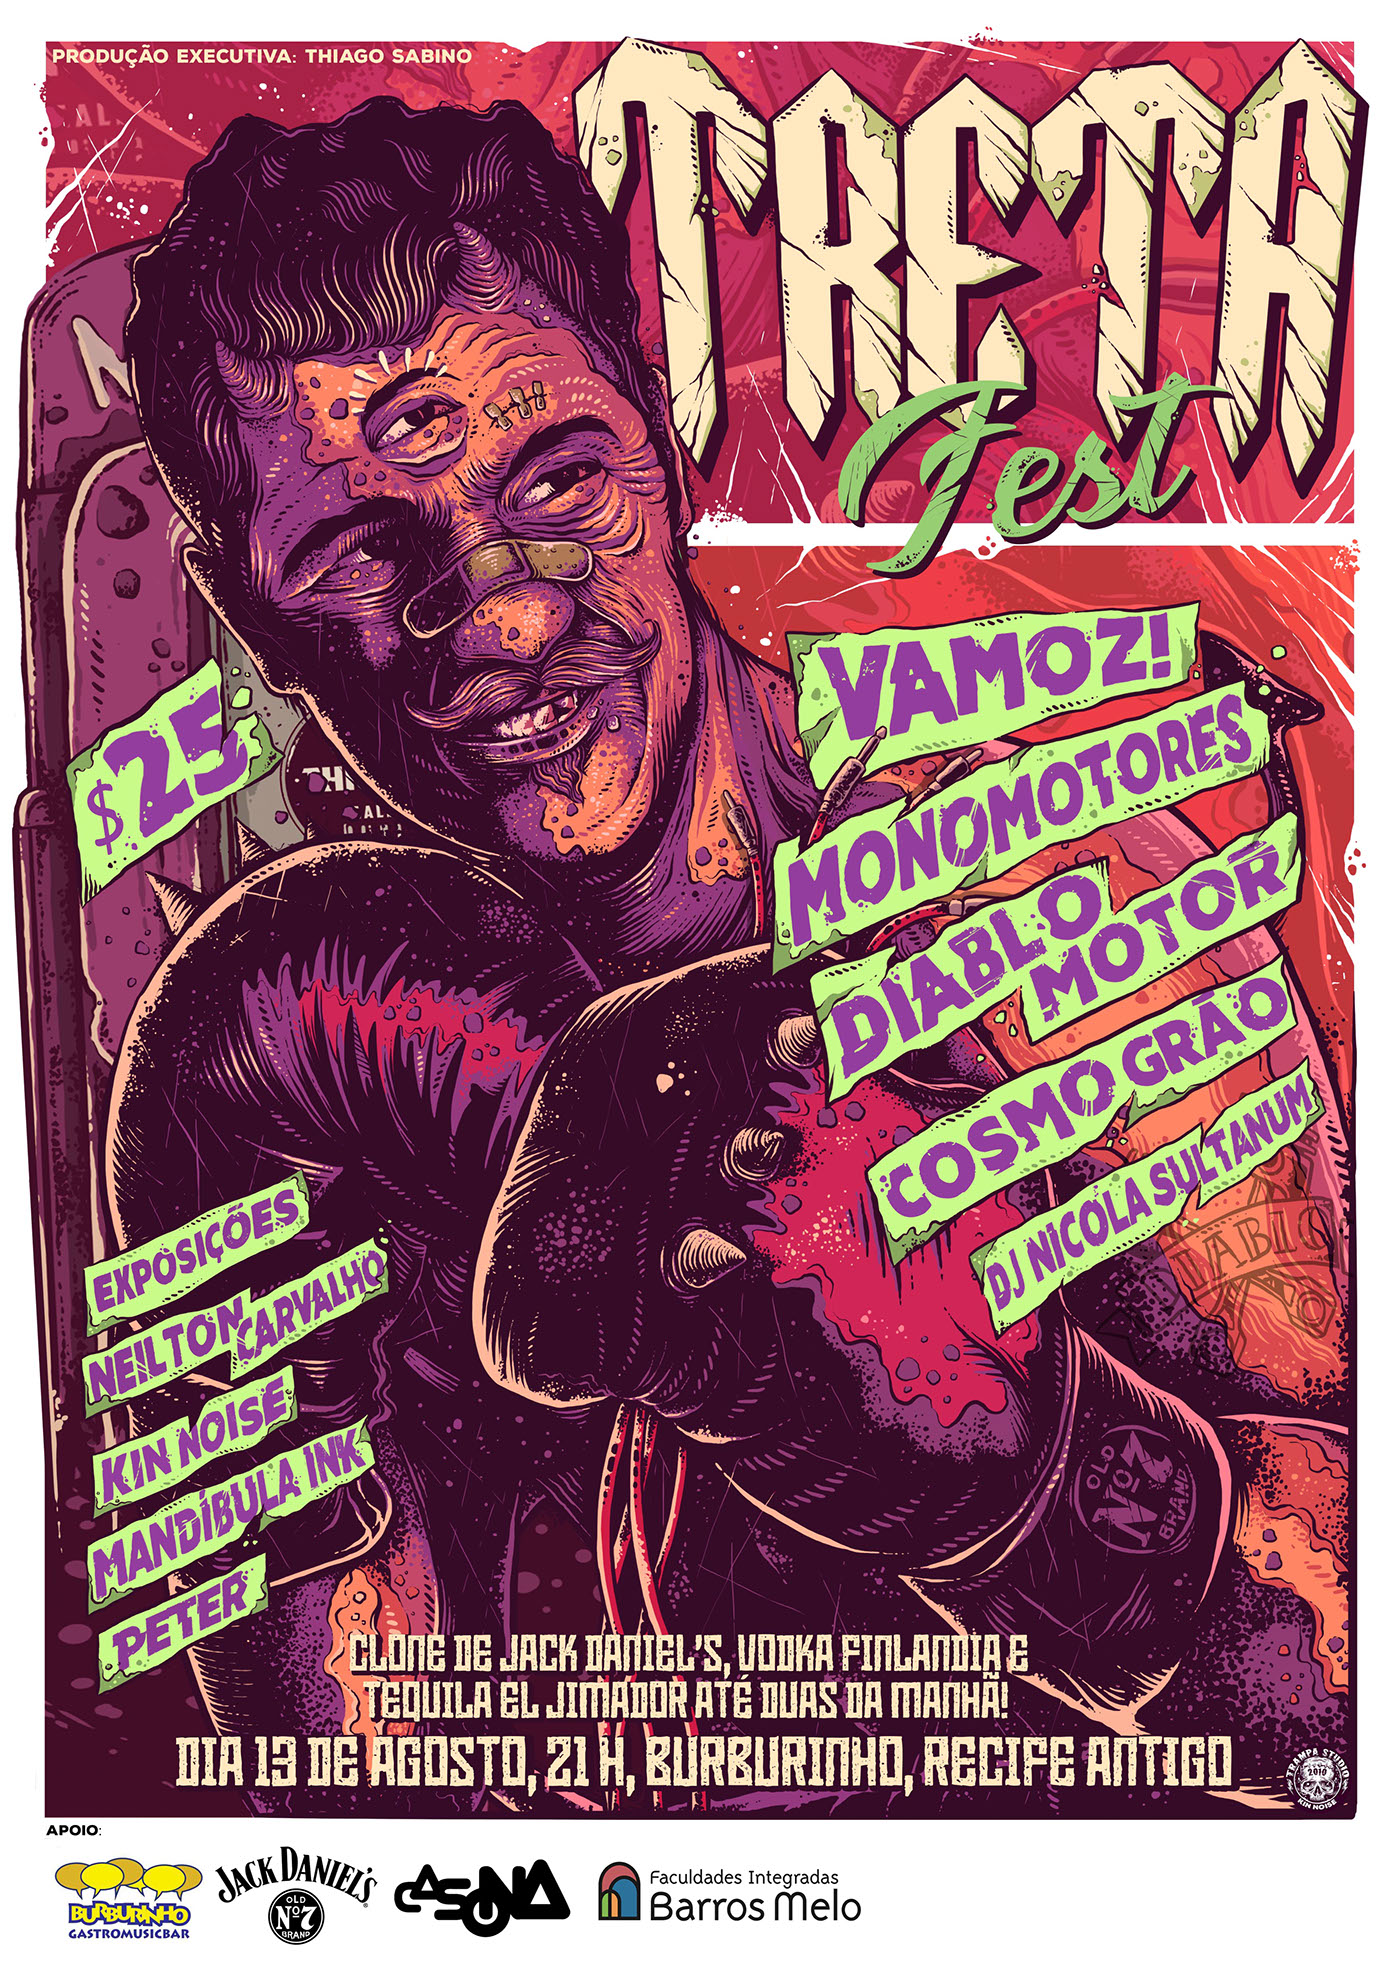 Poster Treta Fest ilustração por Kin Noise / Trampa studio #stoner #recife #rocknroll #expo #ilustração #trampastudio #lowbrow #tretafest #devil #artwork #wacom #poster #vintage #retro